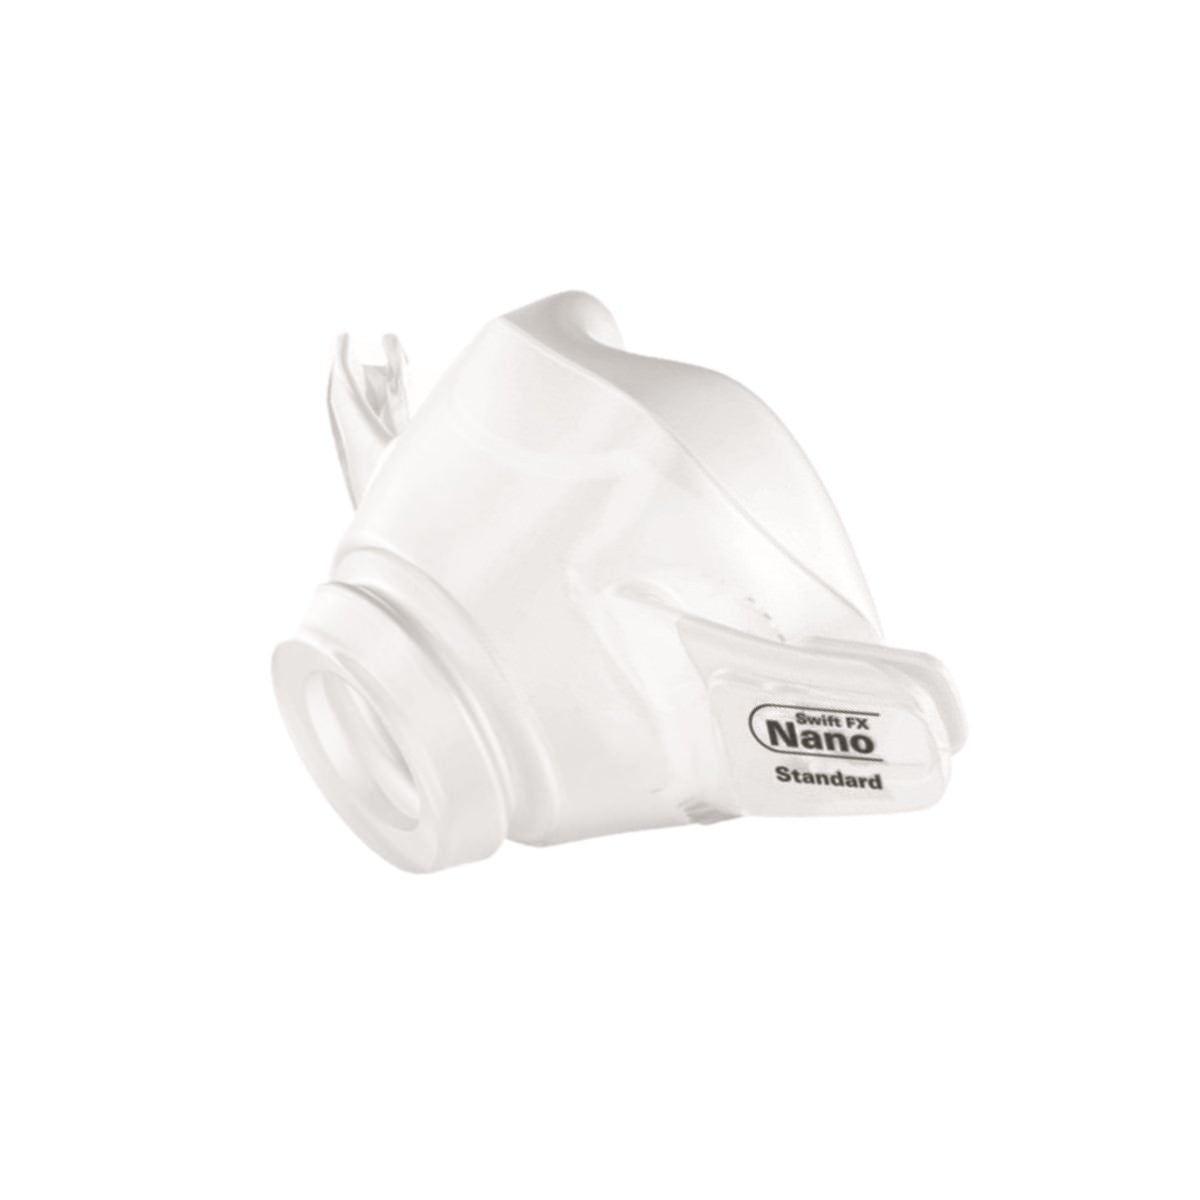 ResMed Swift FX Nano Nasal Mask Cushion